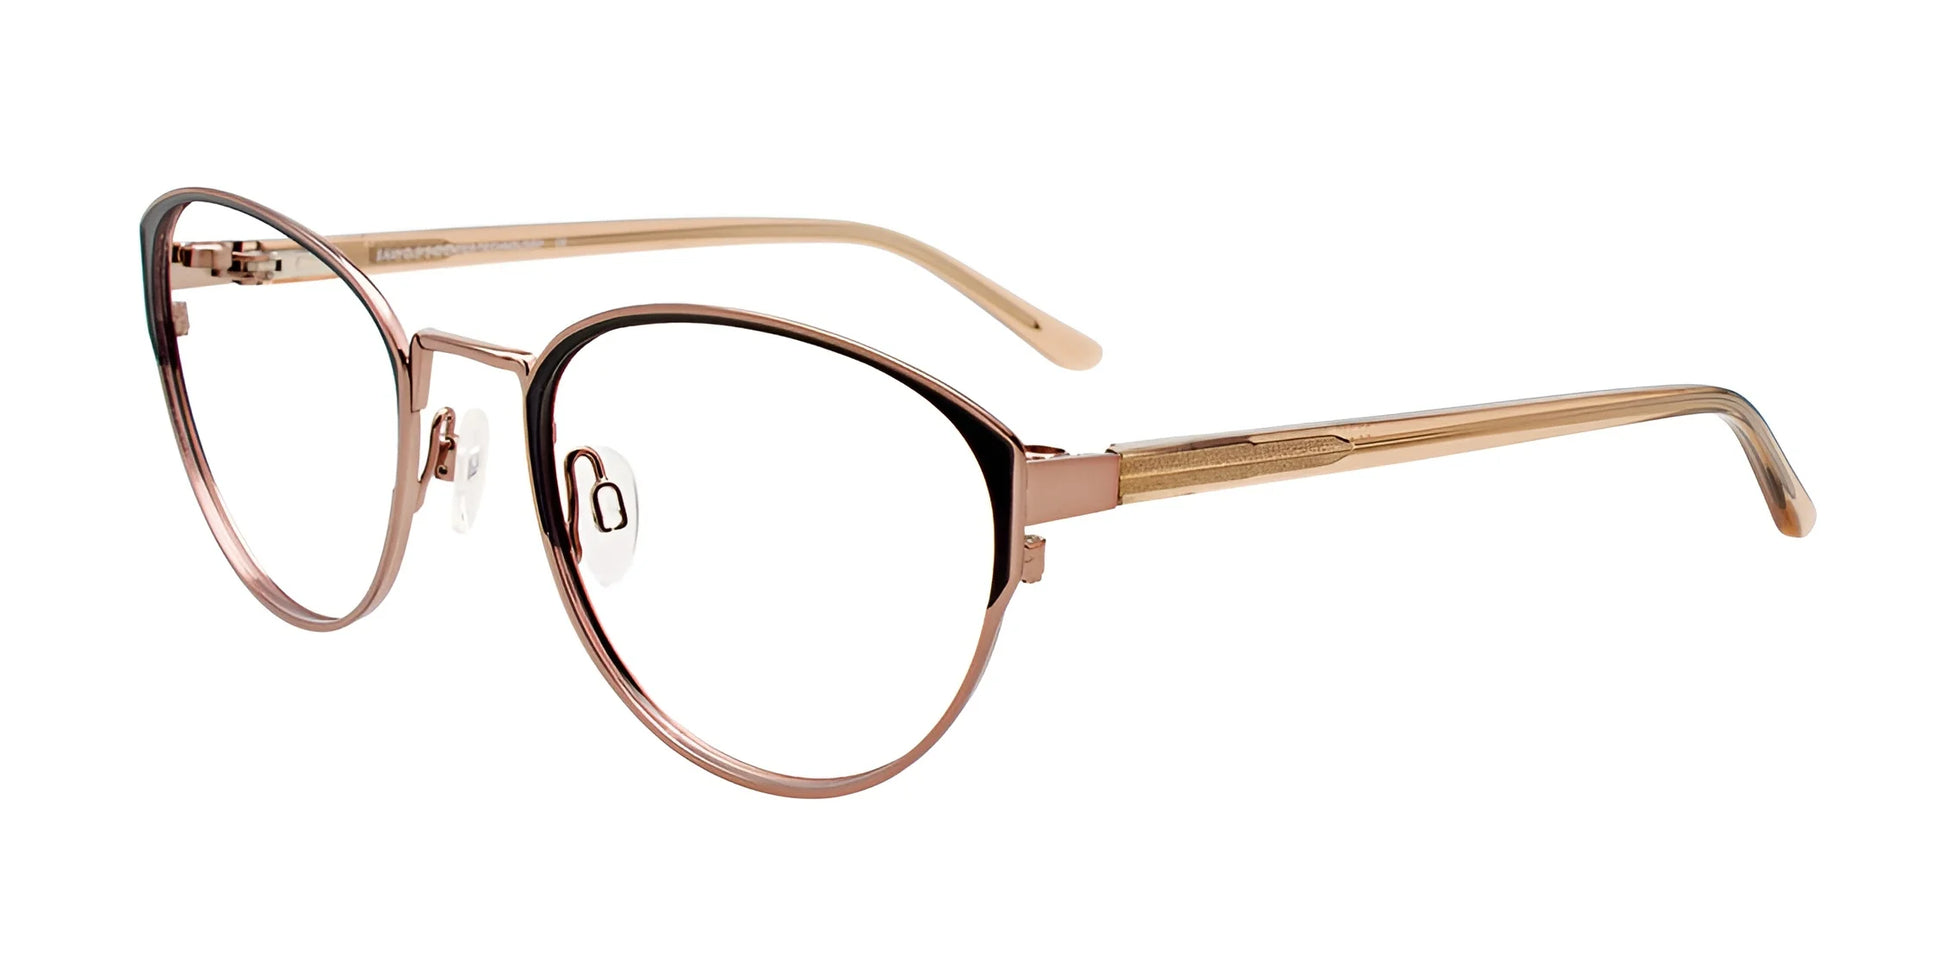 EasyClip EC603 Eyeglasses with Clip-on Sunglasses Sat Blk & Sh Lt Brn / Brn Cryl